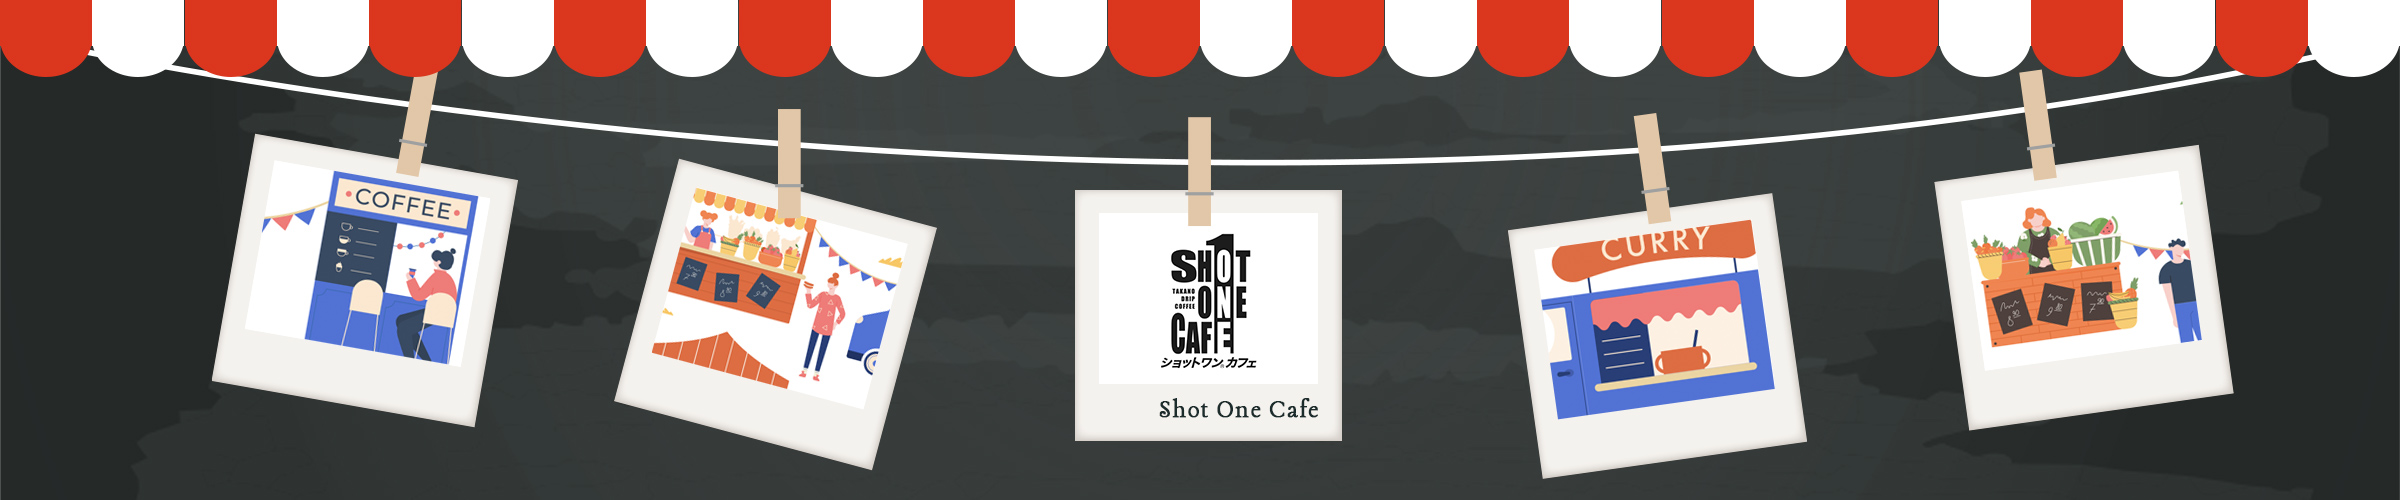 responsive1_slider_shot1cafe.jpg